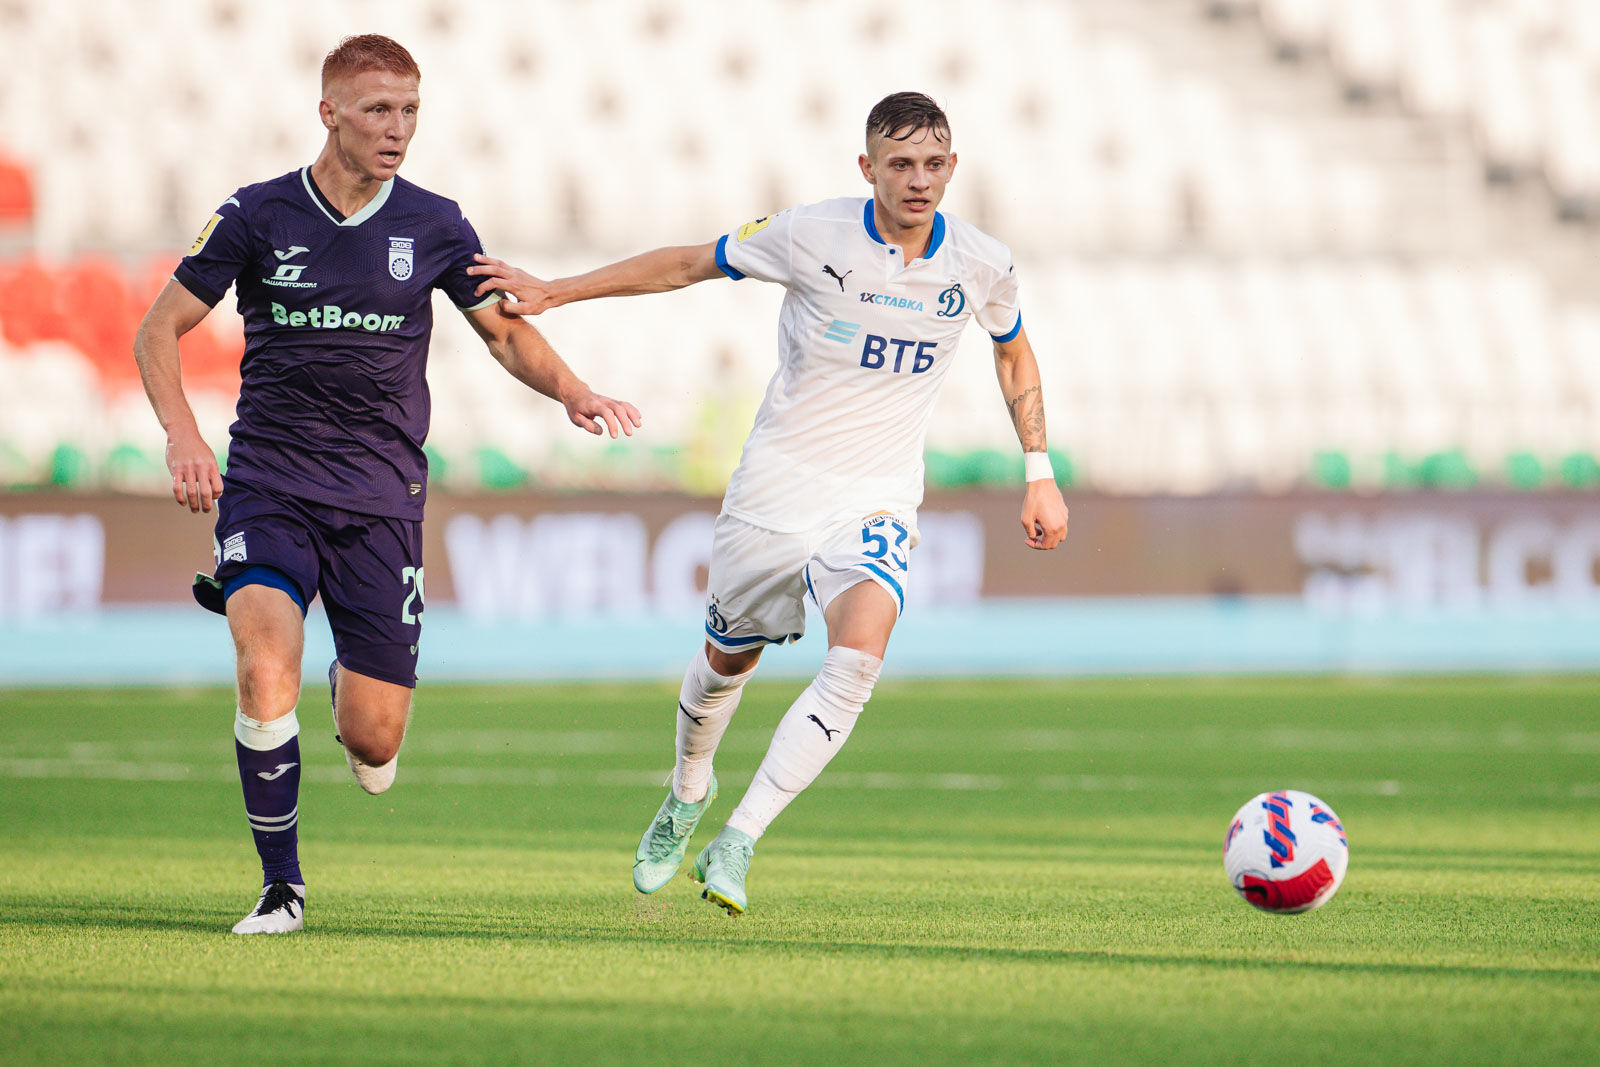 Photo gallery from the match Ufa vs Dynamo